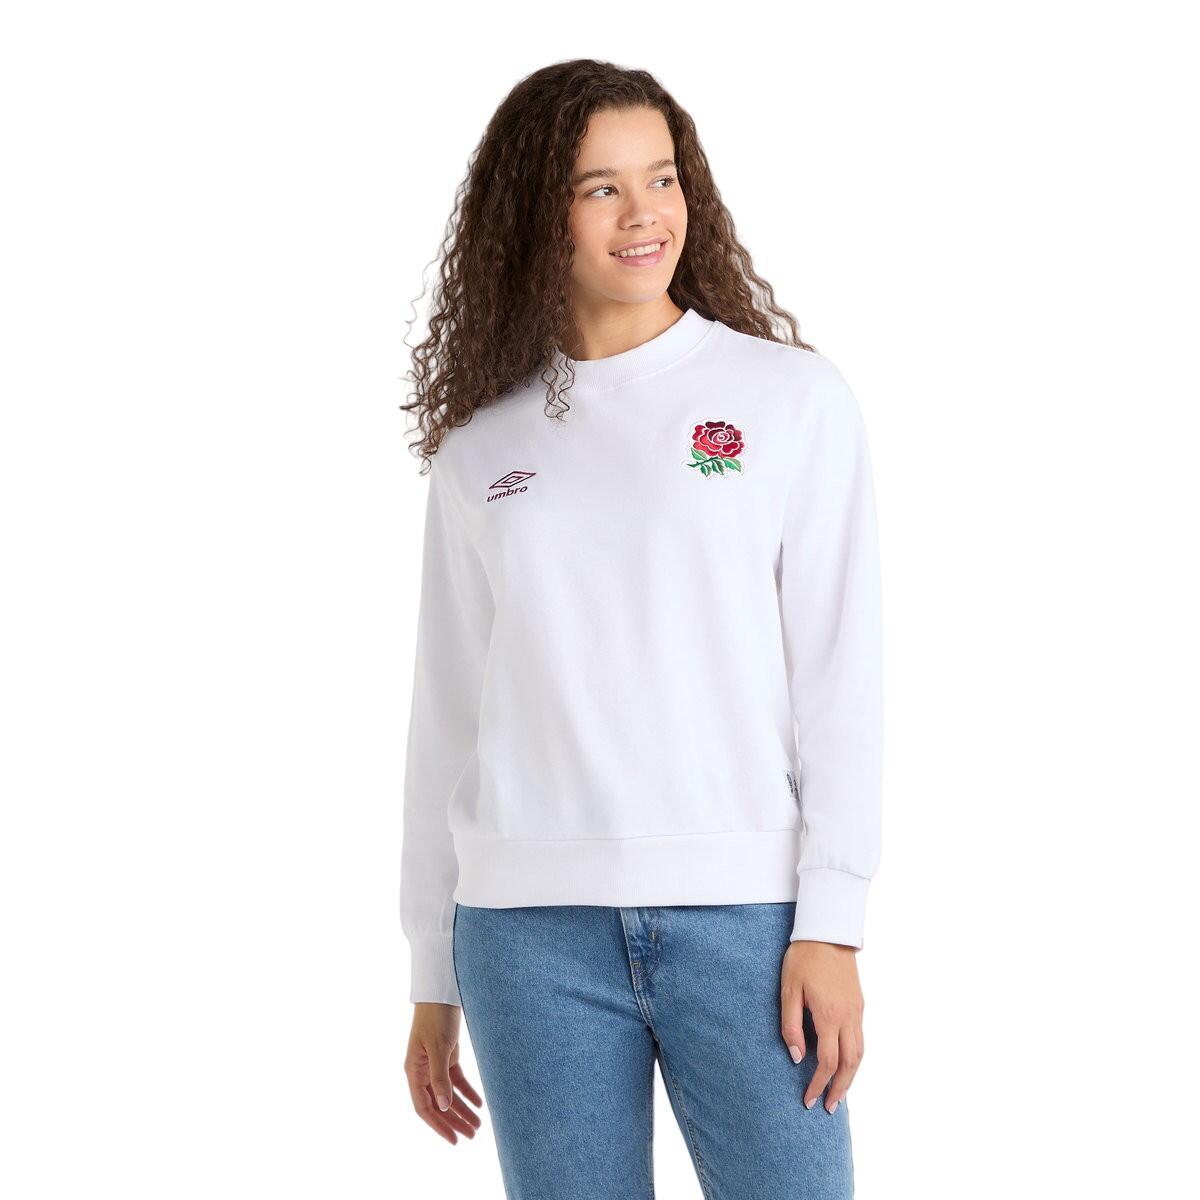 UMBRO Womens/Ladies Dynasty England Rugby Sweatshirt (White)